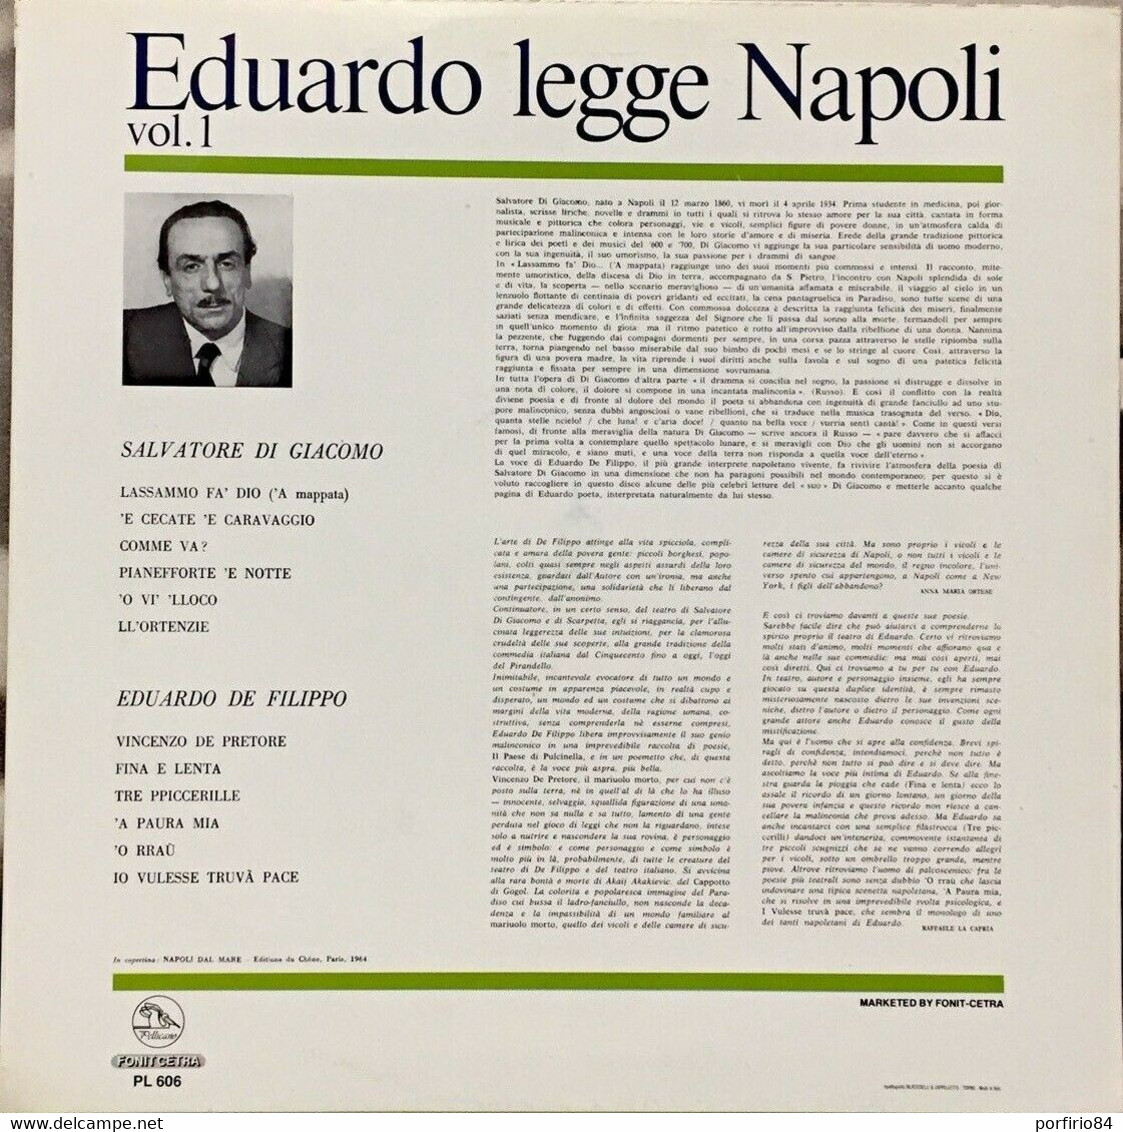 EDUARDO DE FILIPPO RARO LP - EDUARDO LEGGE NAPOLI VOL. 1 SALVATORE DI GIACOMO - Other - Italian Music